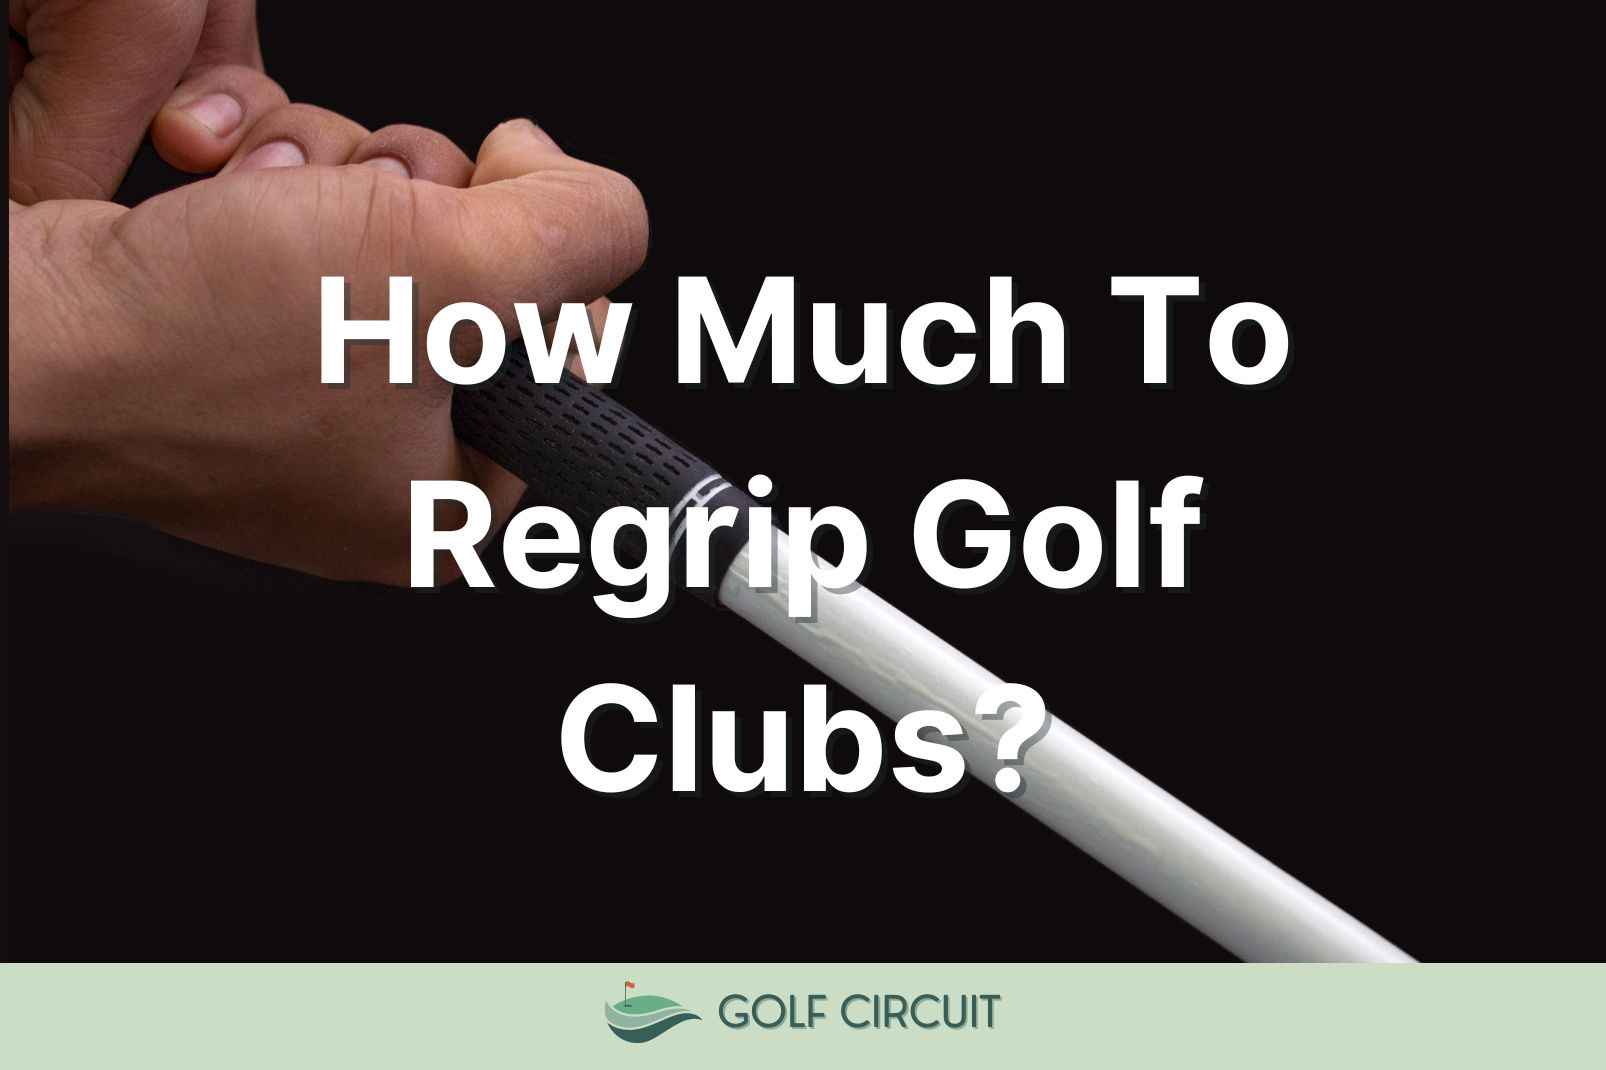 Golfer holding regripped golf clubs